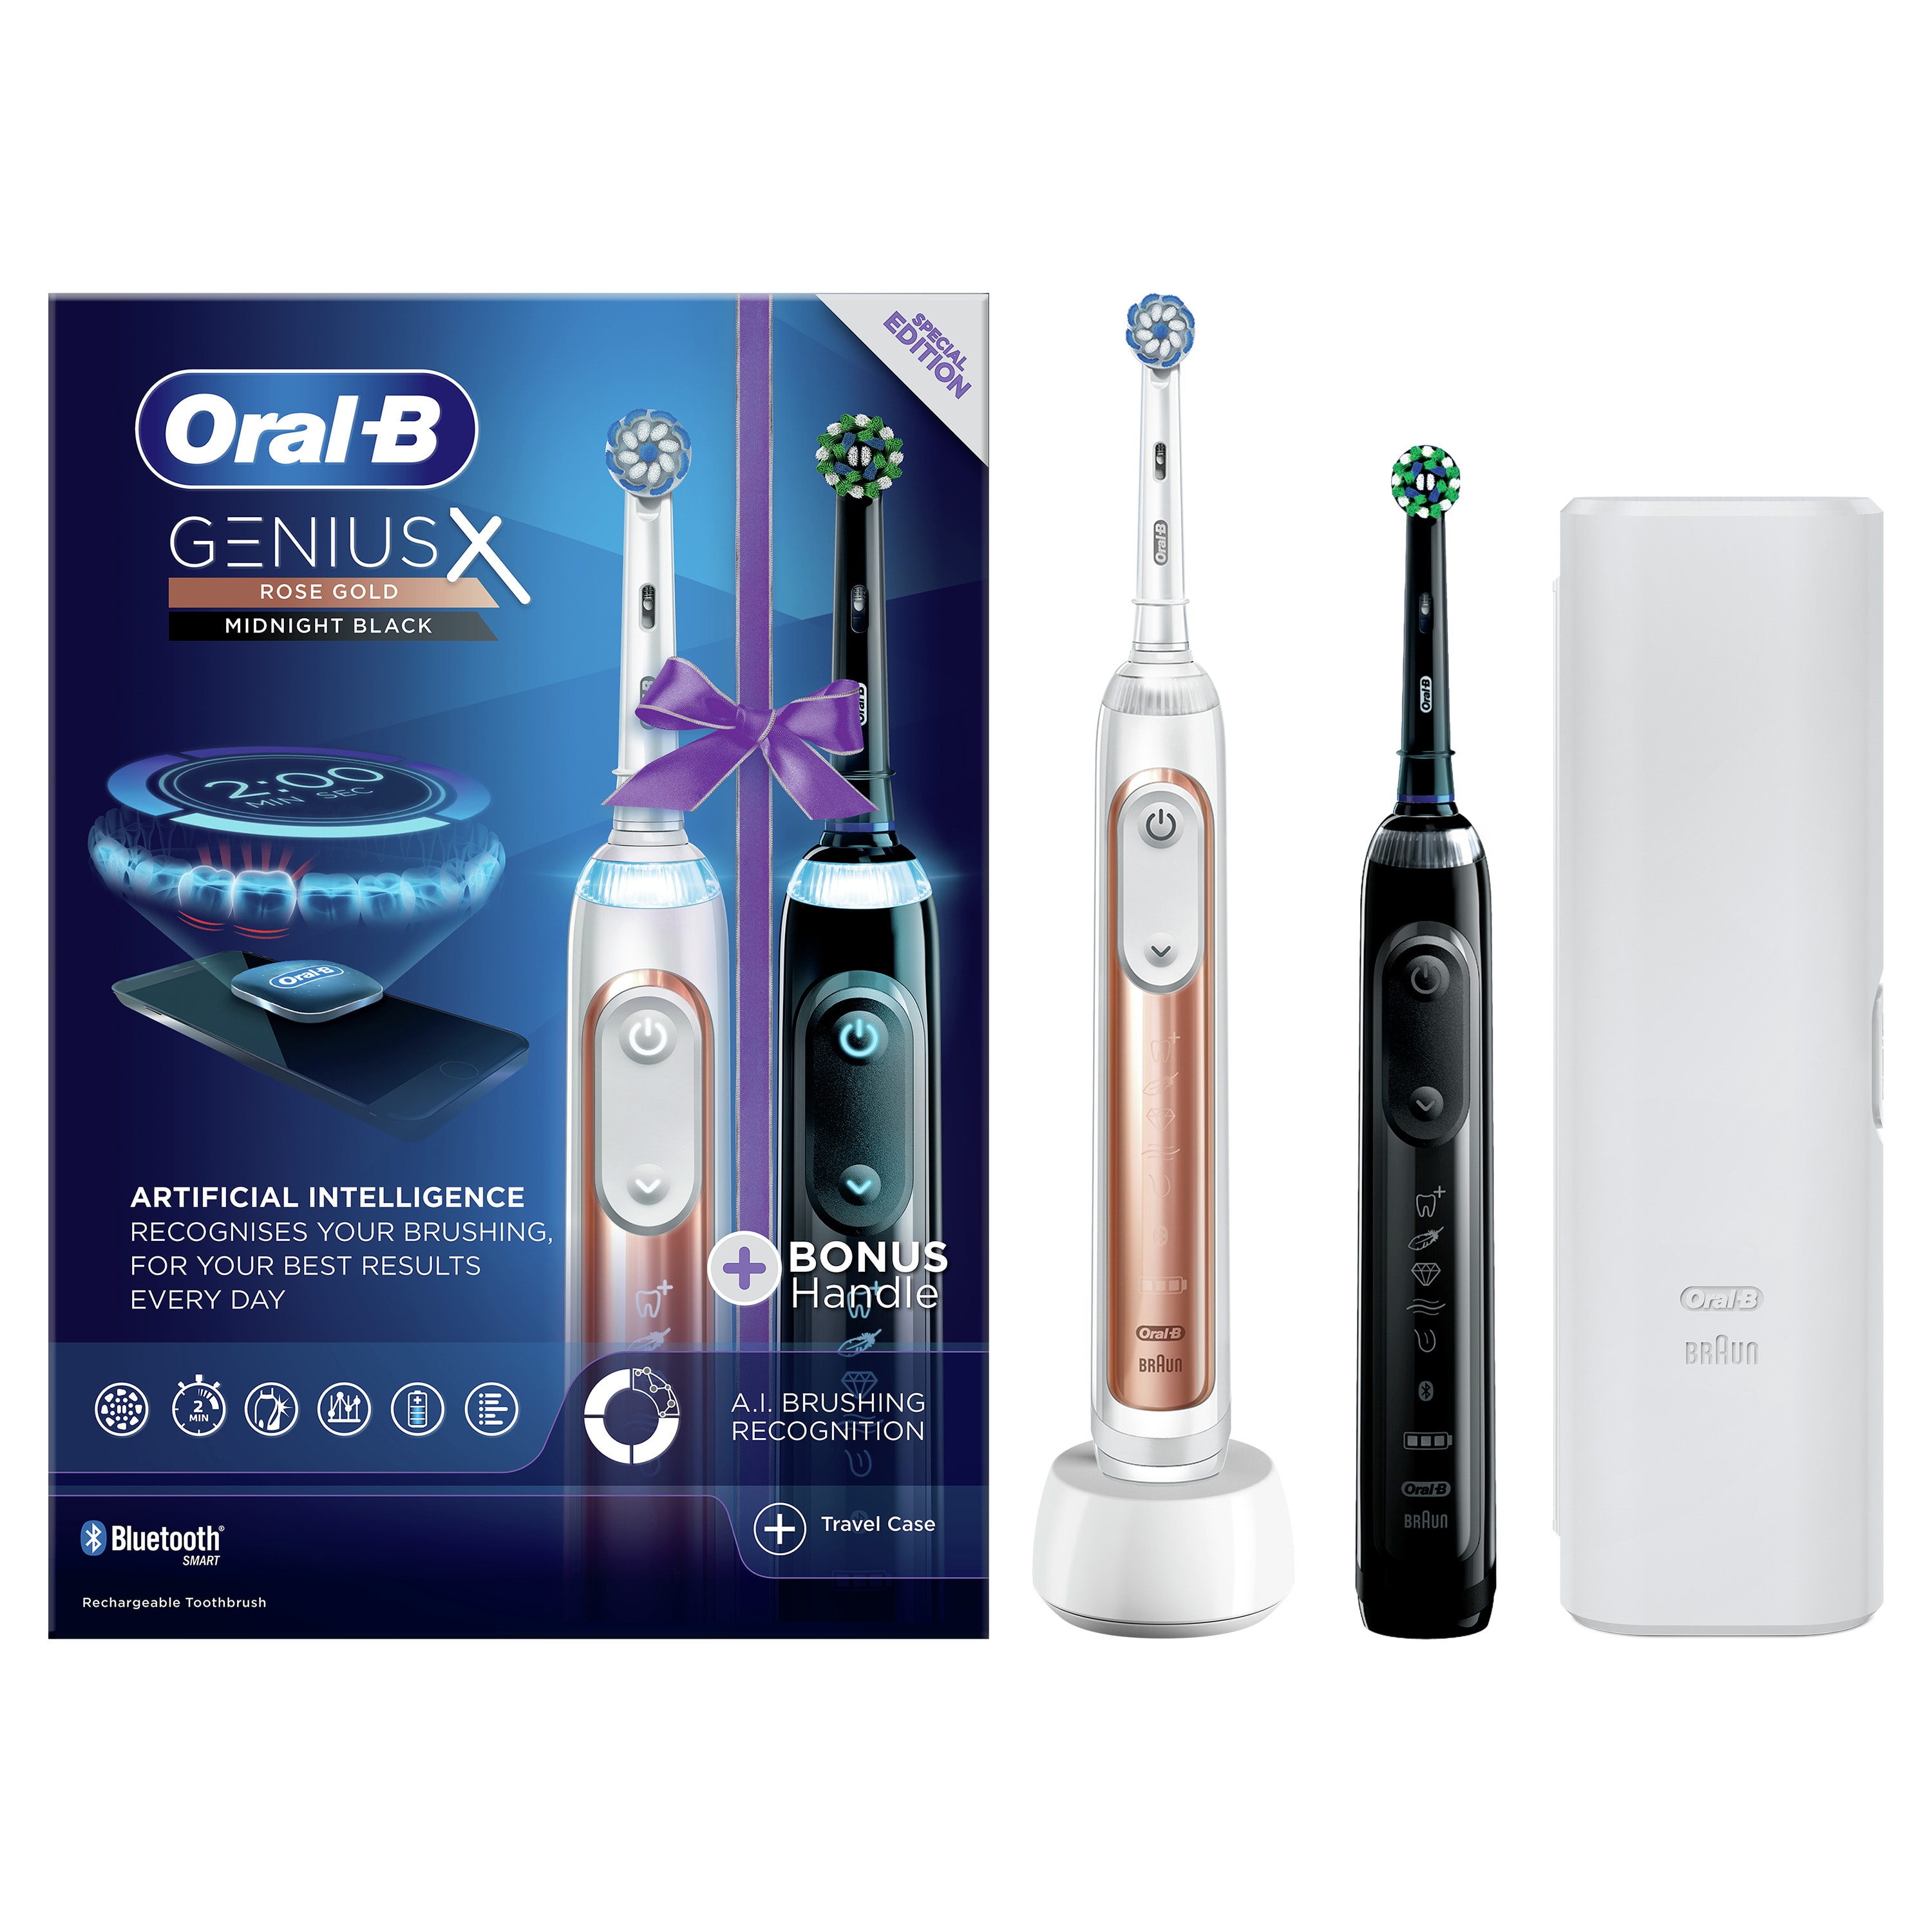 Oral-B Genius X electric toothbrush duo pack (Black & Rose Gold)